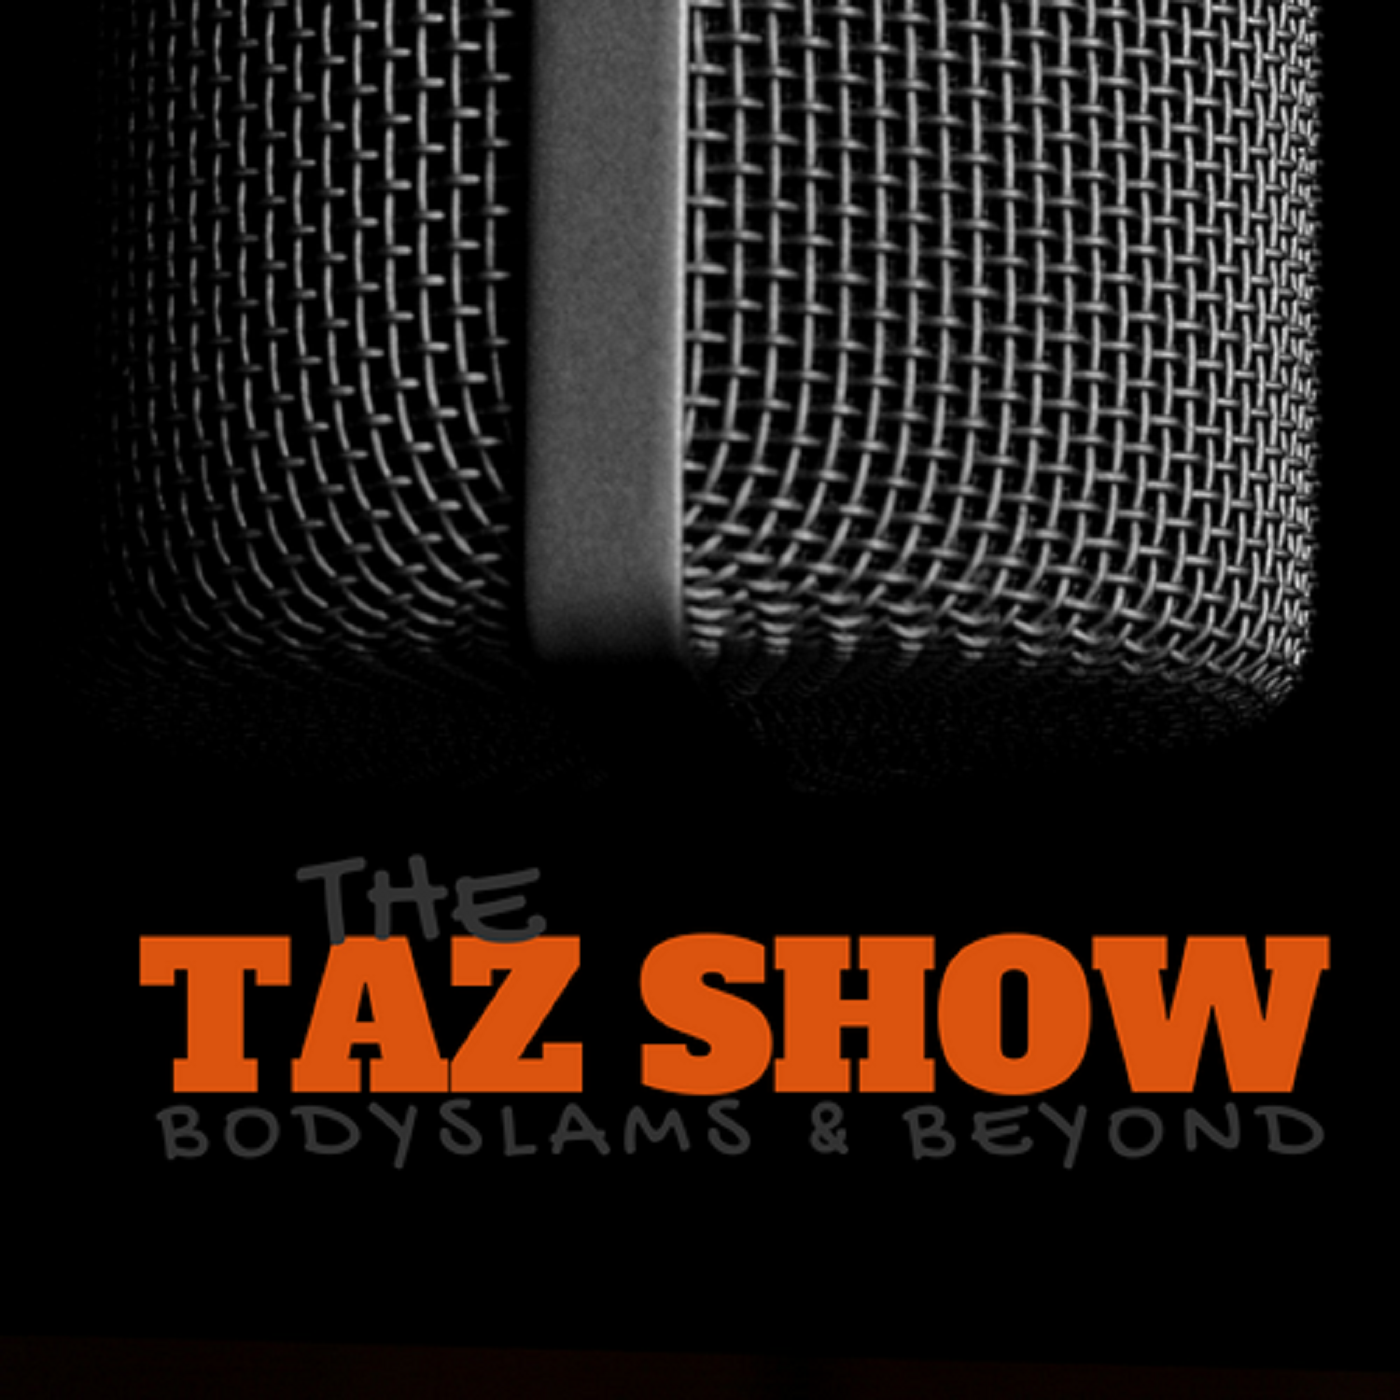 Post Wrestlemania Taz Show Special!